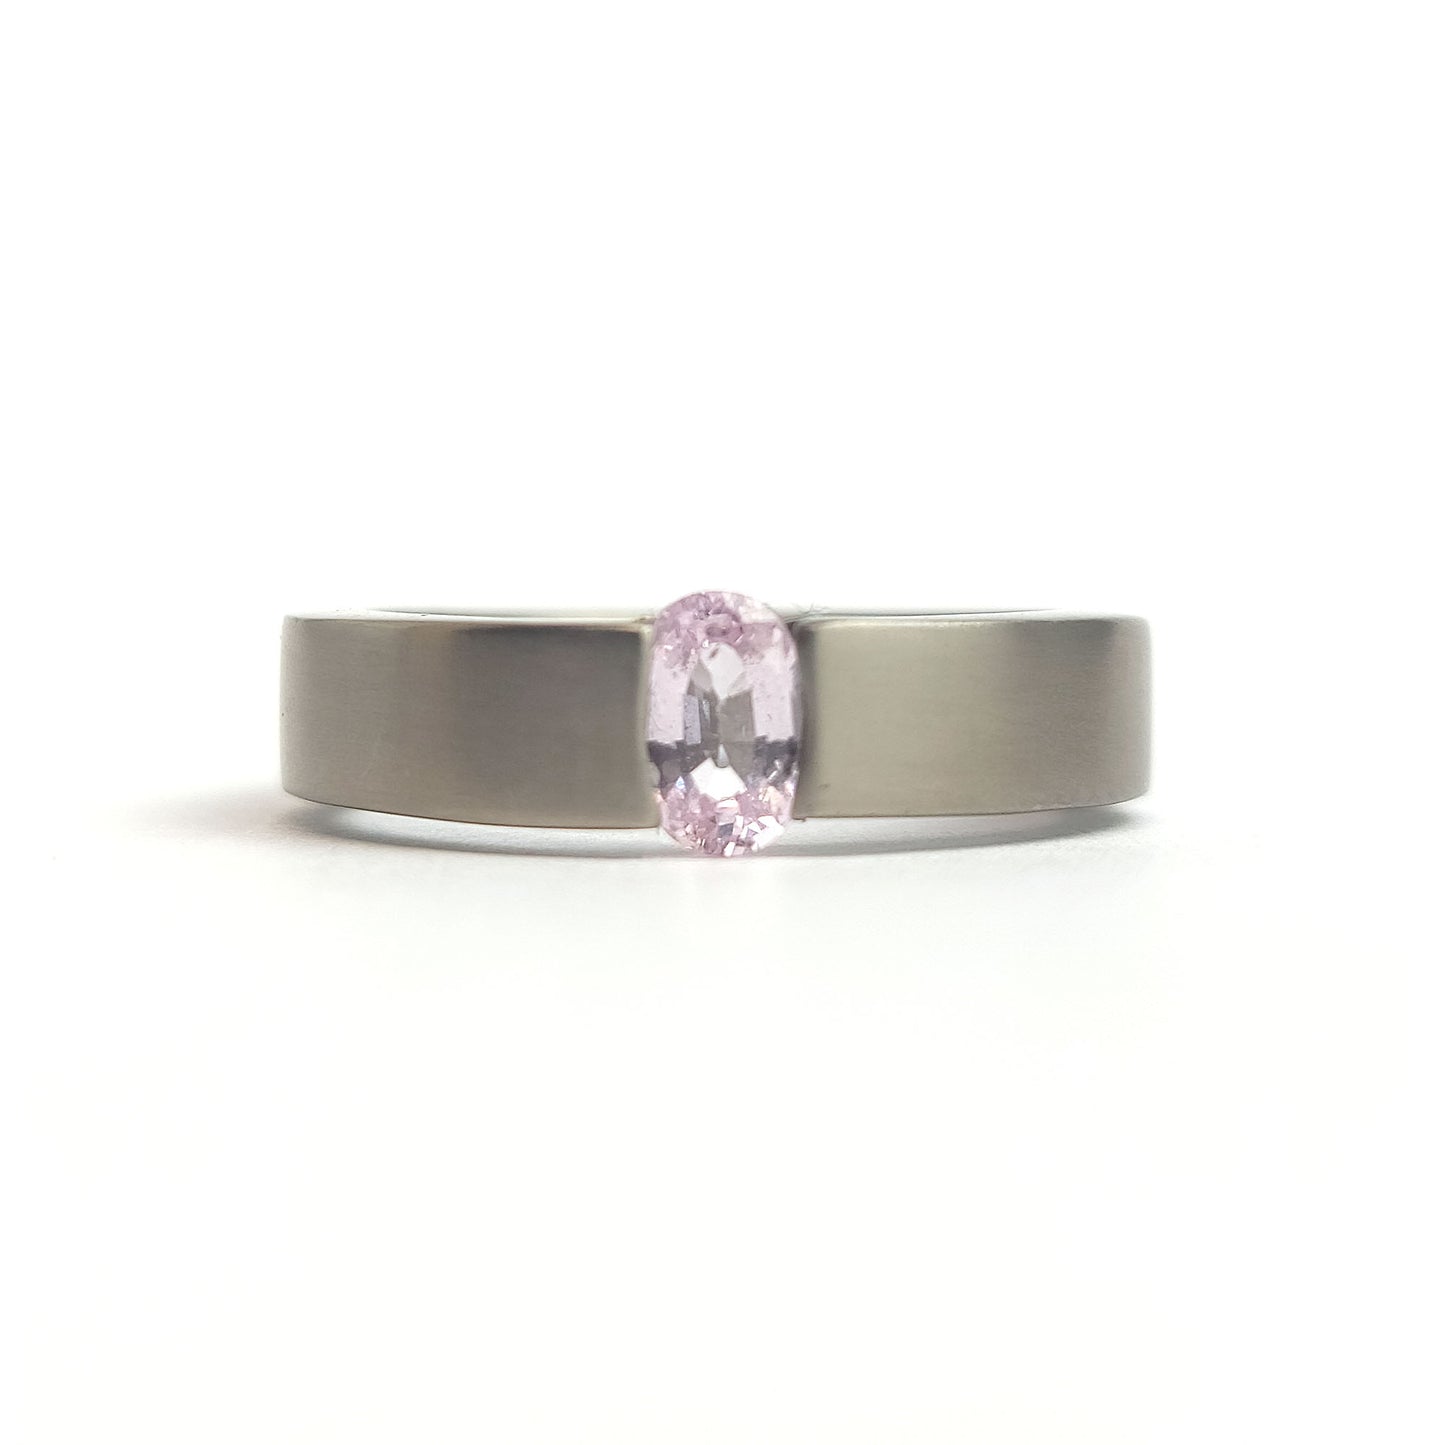 Titanium ring - Light pink Sapphire